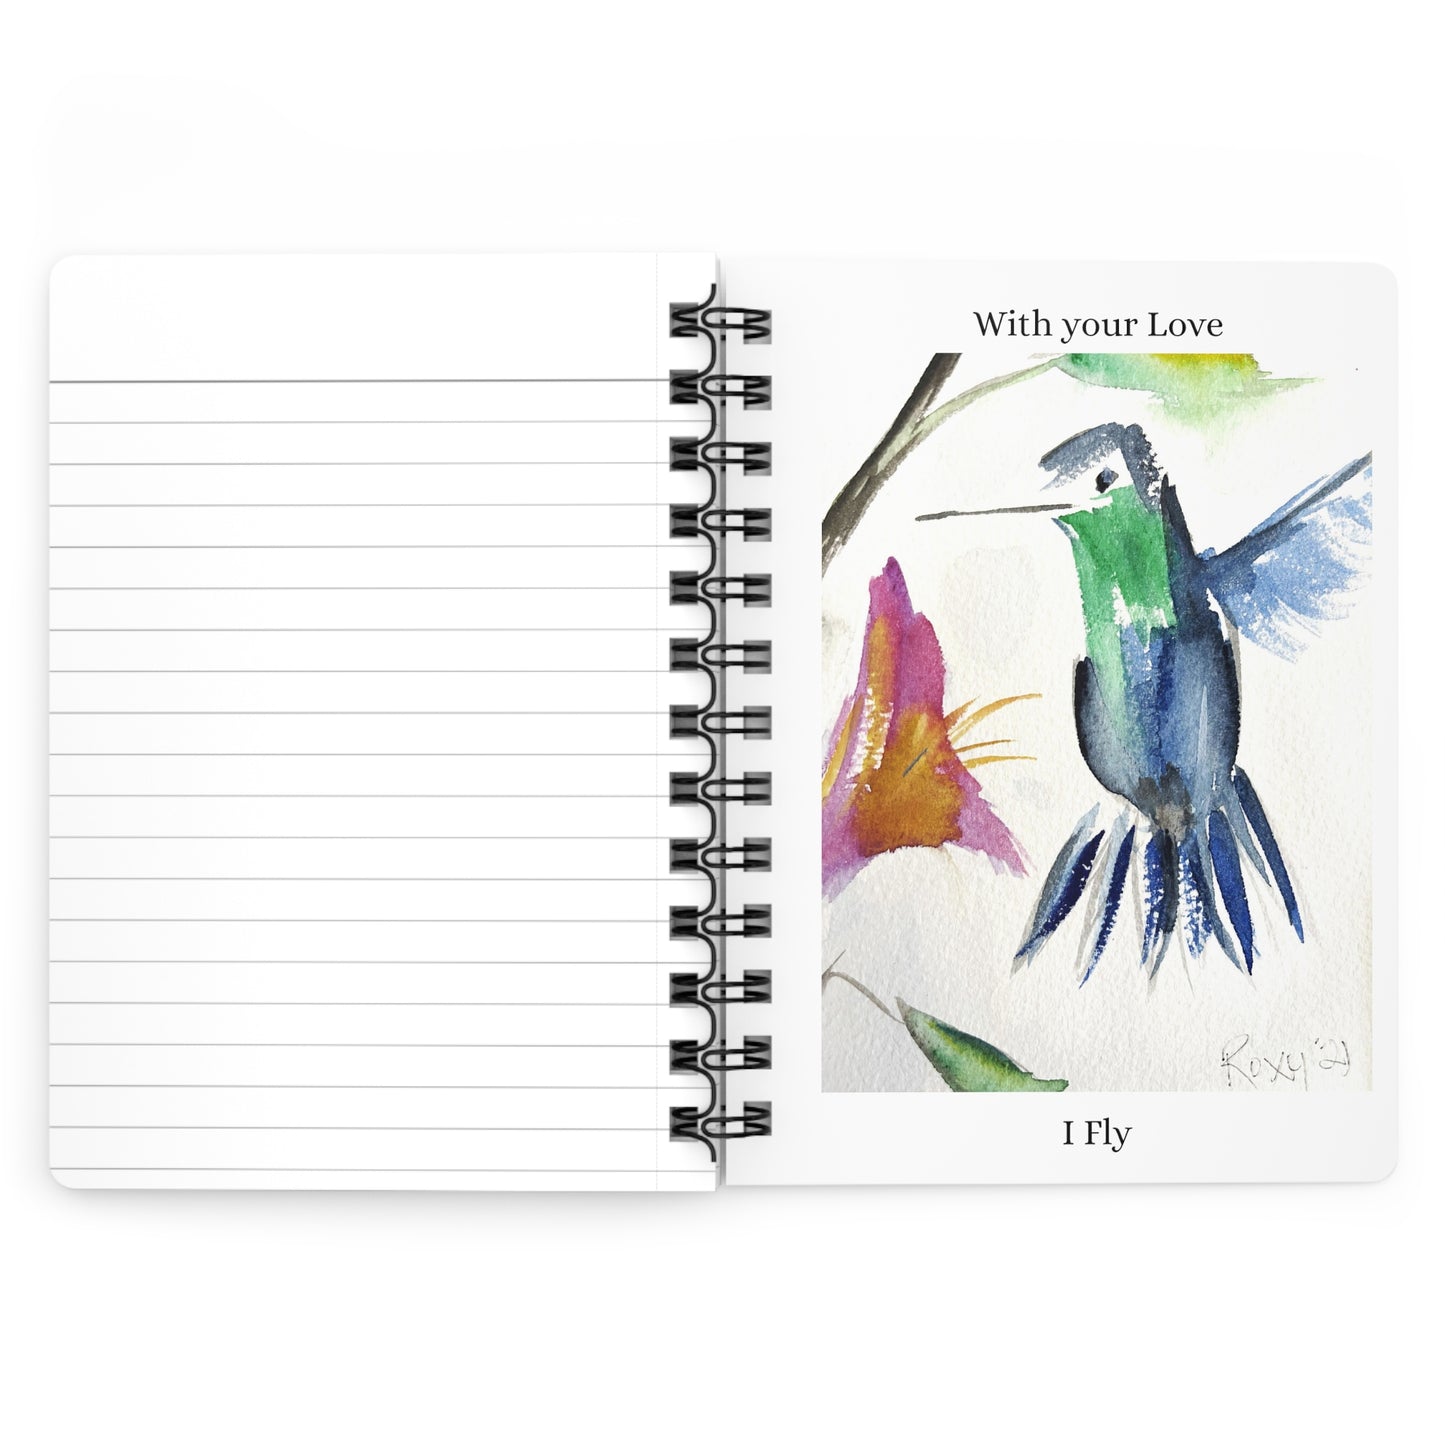 Mom-Watercolor Hummingbirds- Spiral Bound Journal